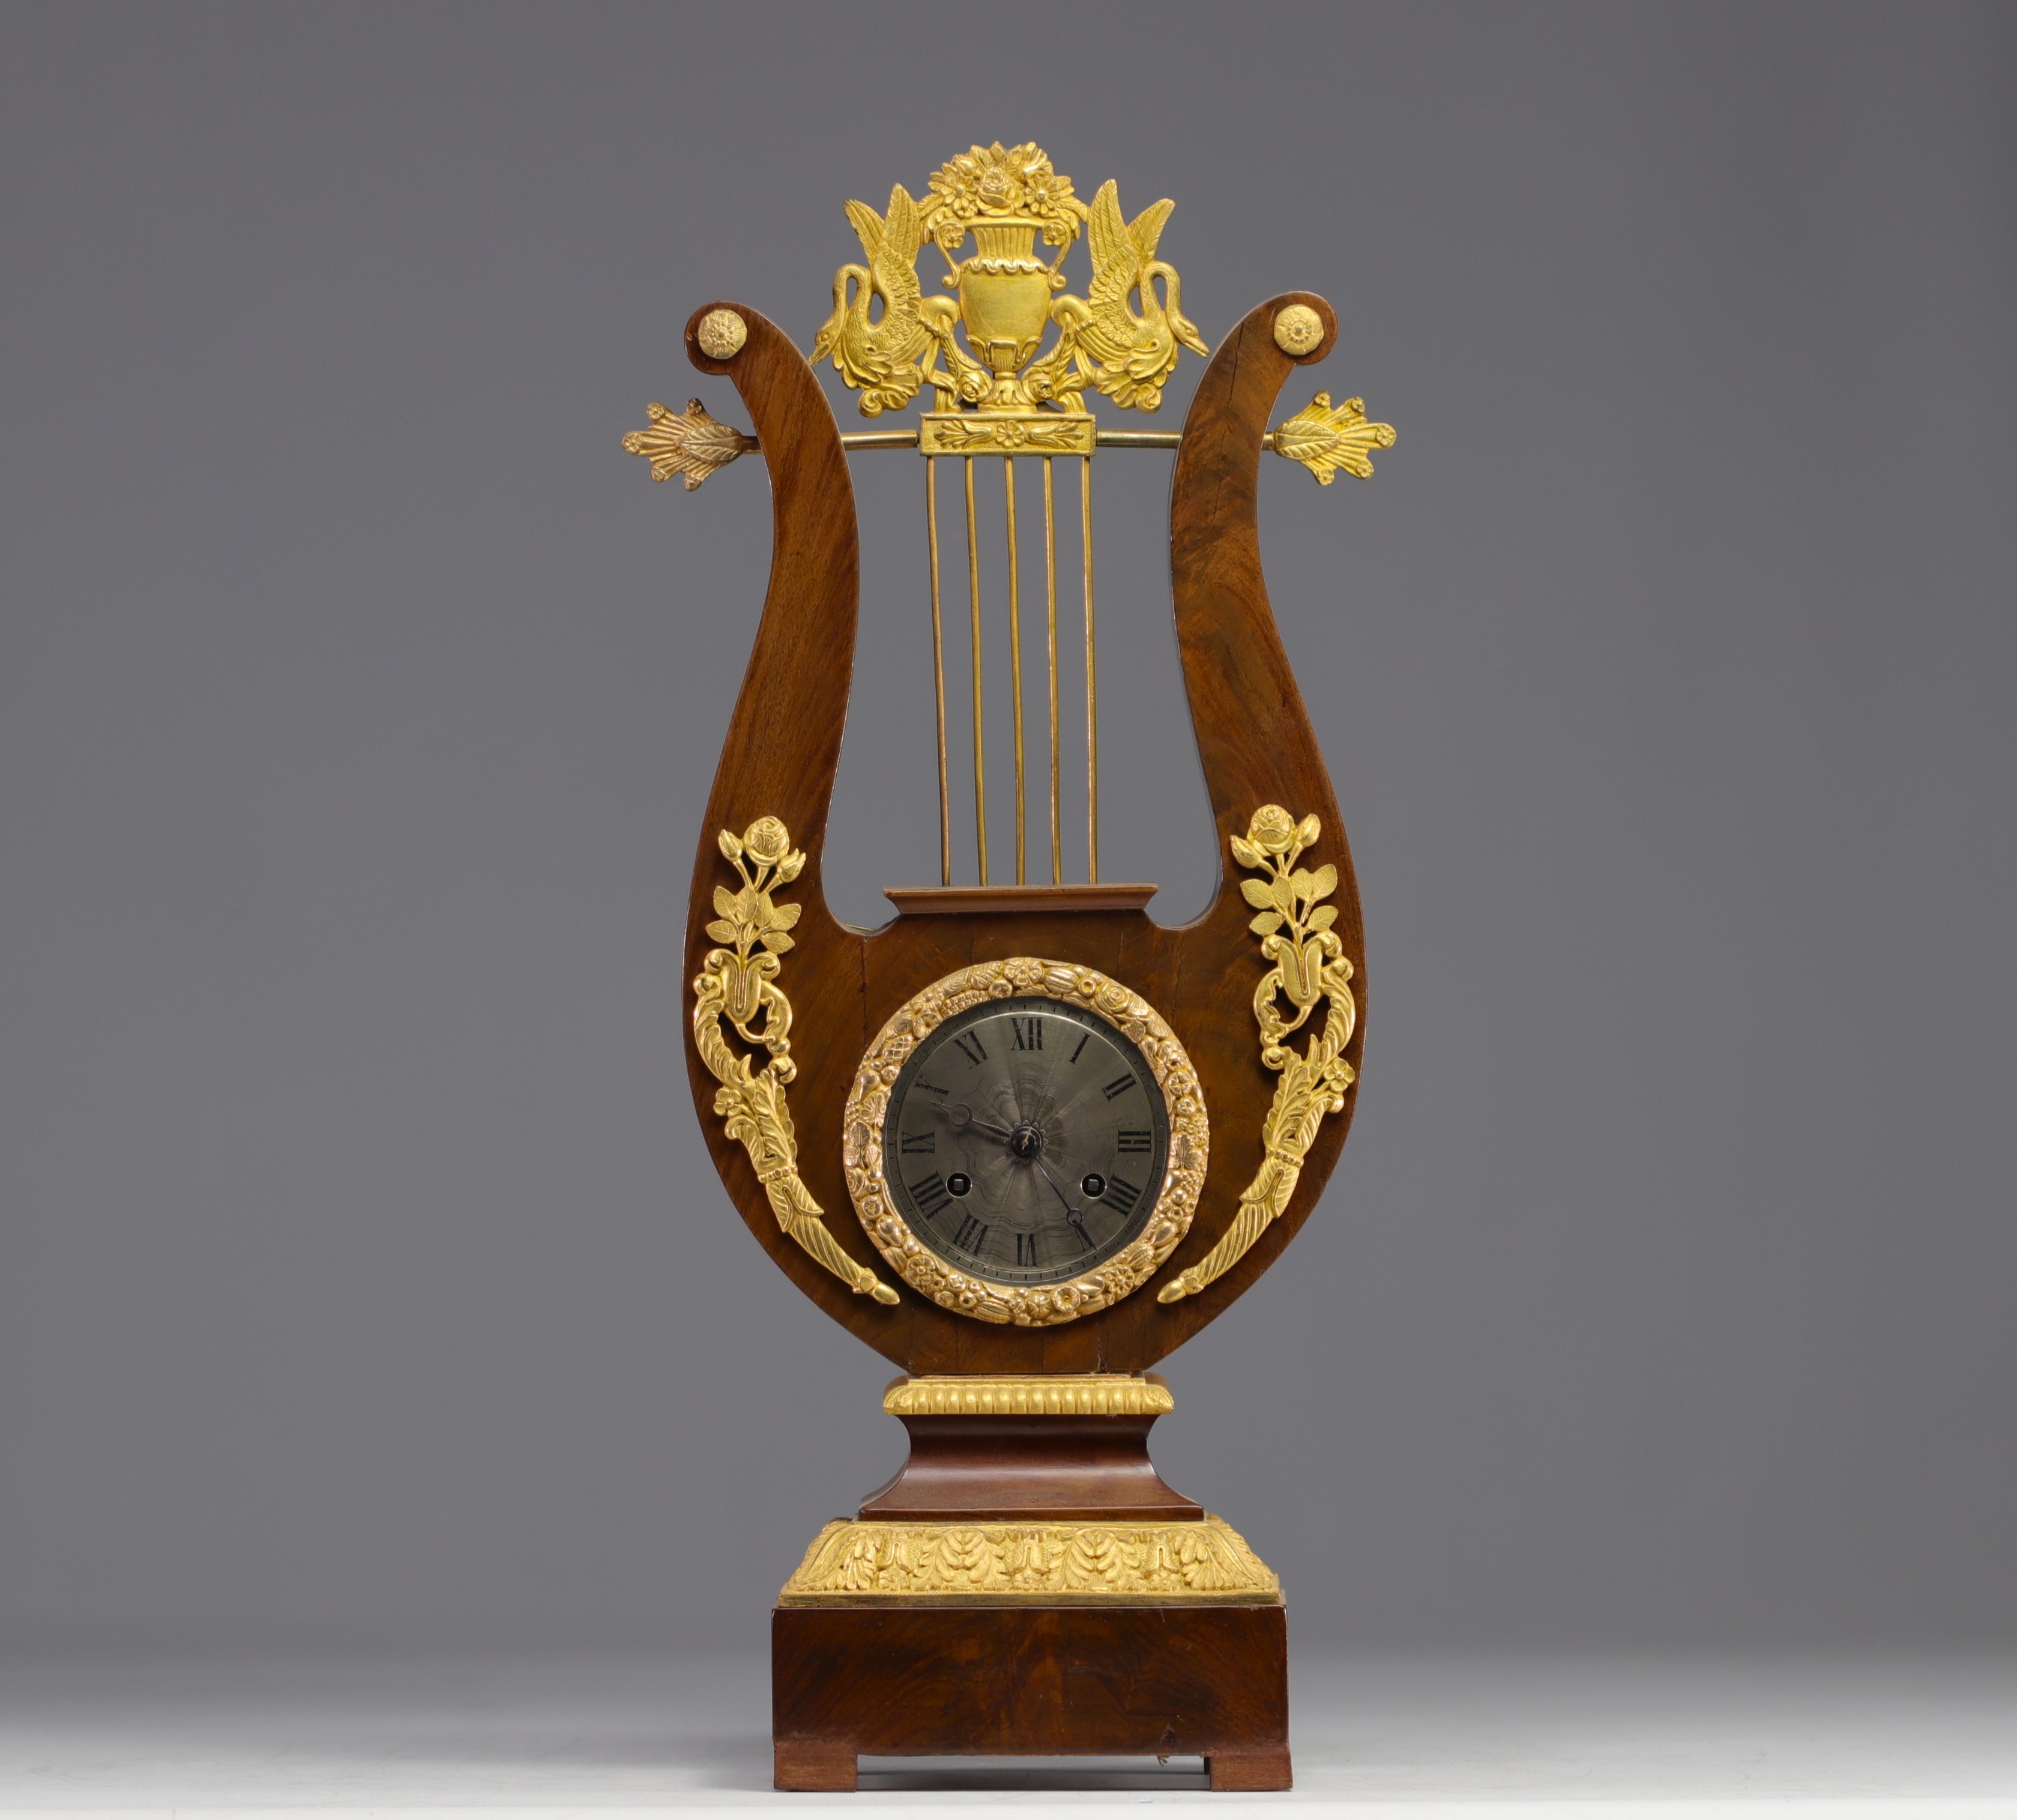 Mahogany veneered and gilt bronze "Lyre" clock, 19th century.